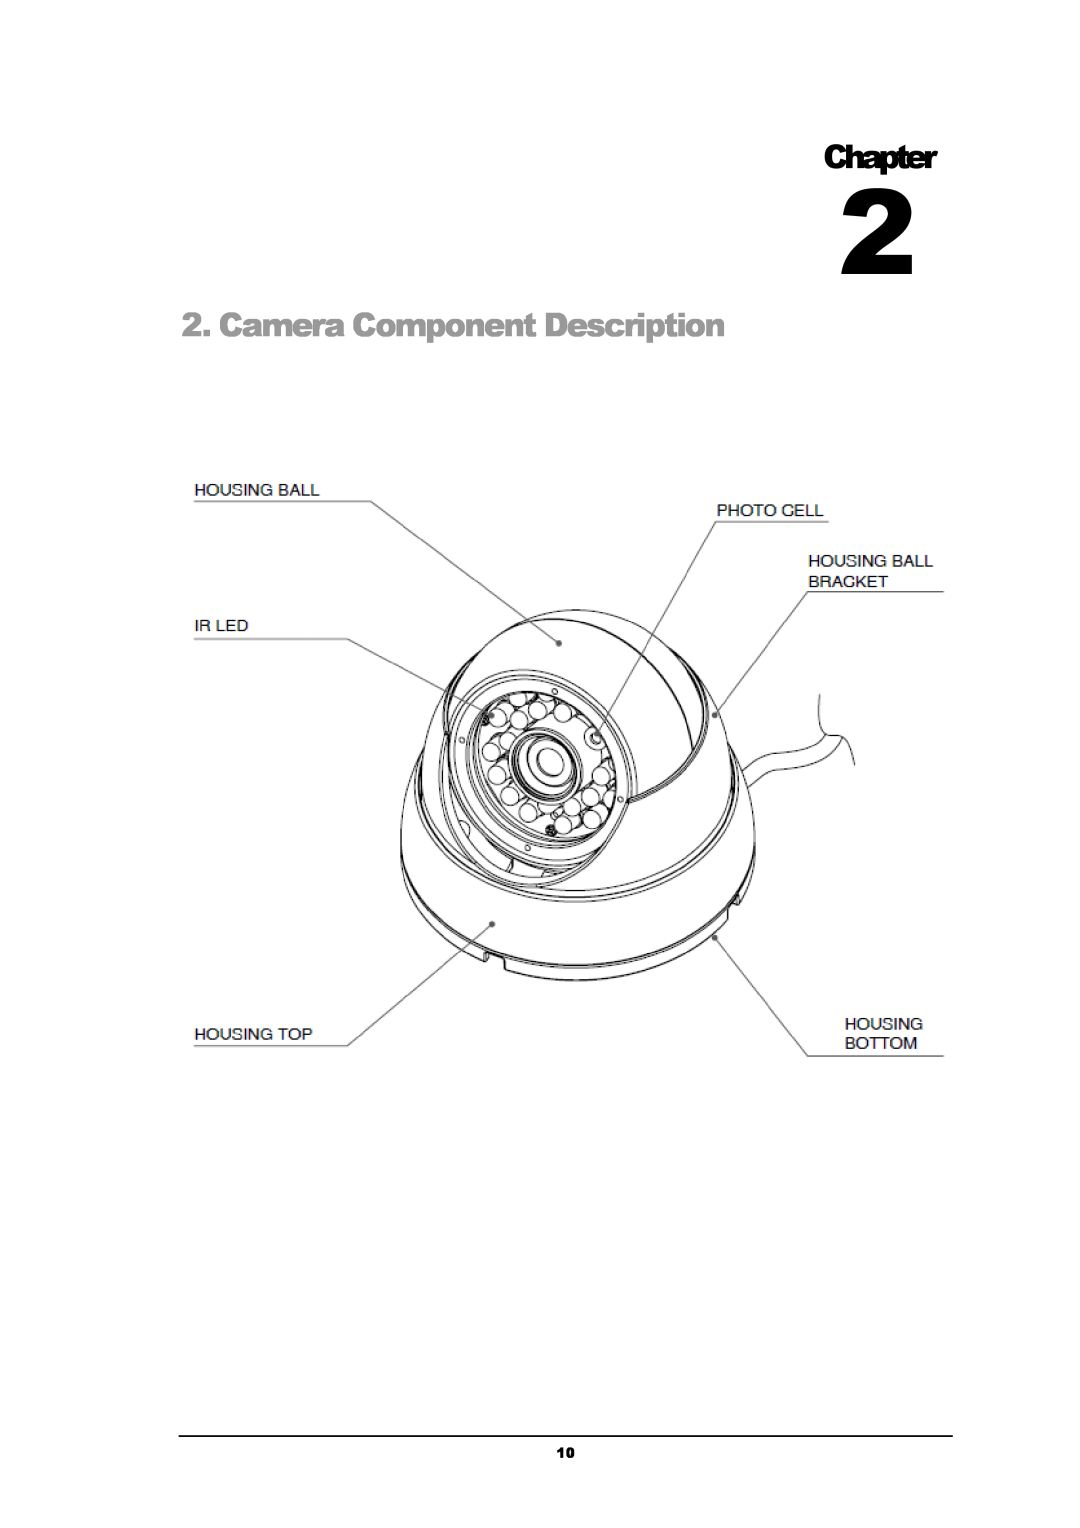 EverFocus EBH5241 manual Camera Component Description, Chapter 